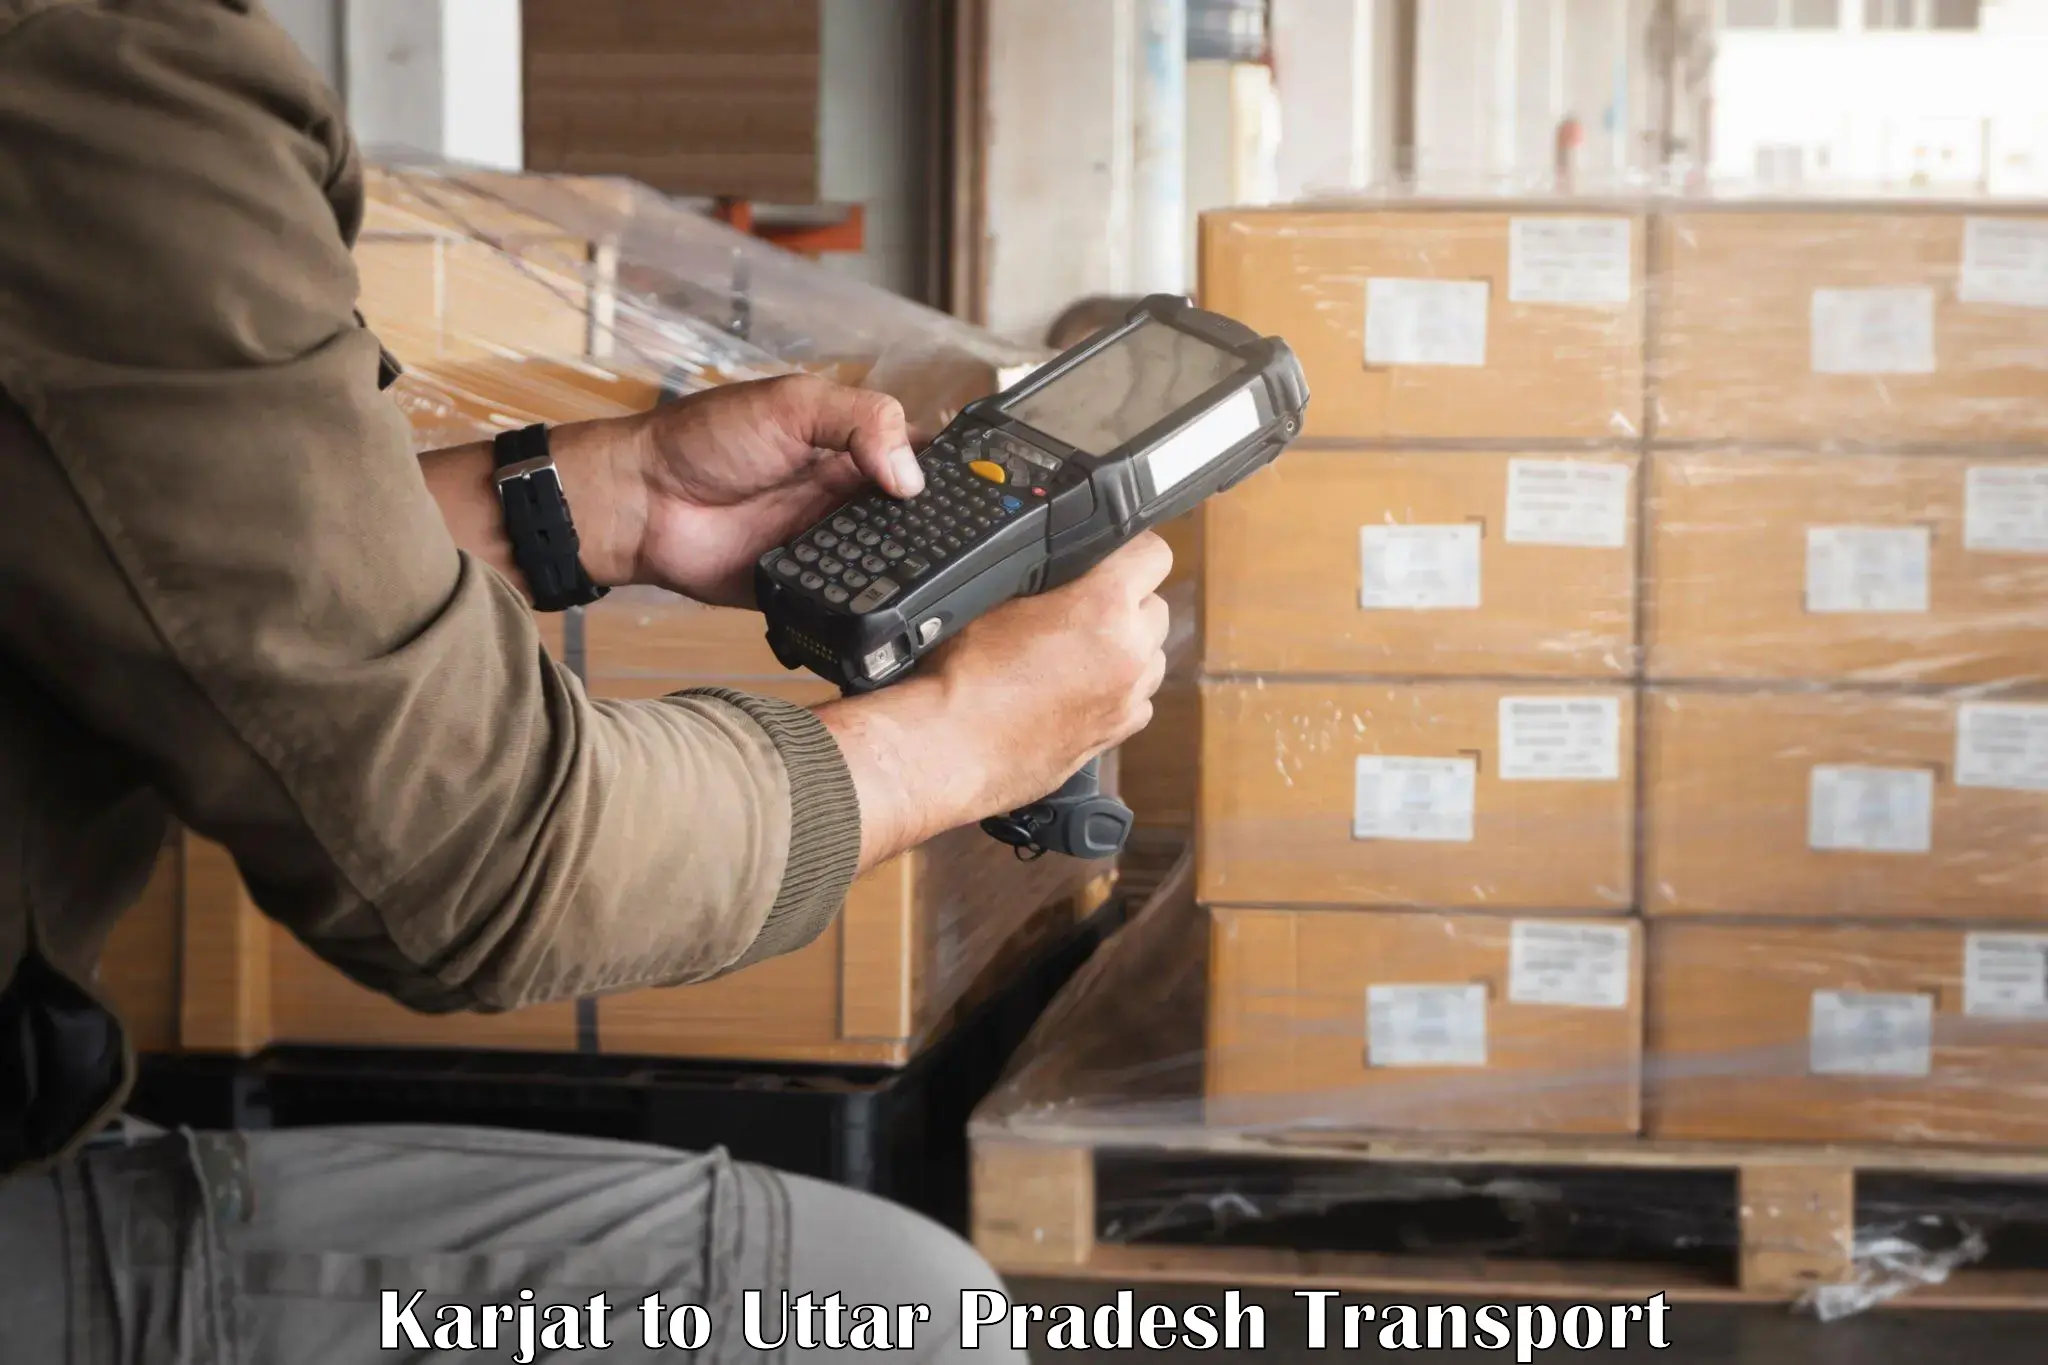 Transport in sharing in Karjat to Chopan